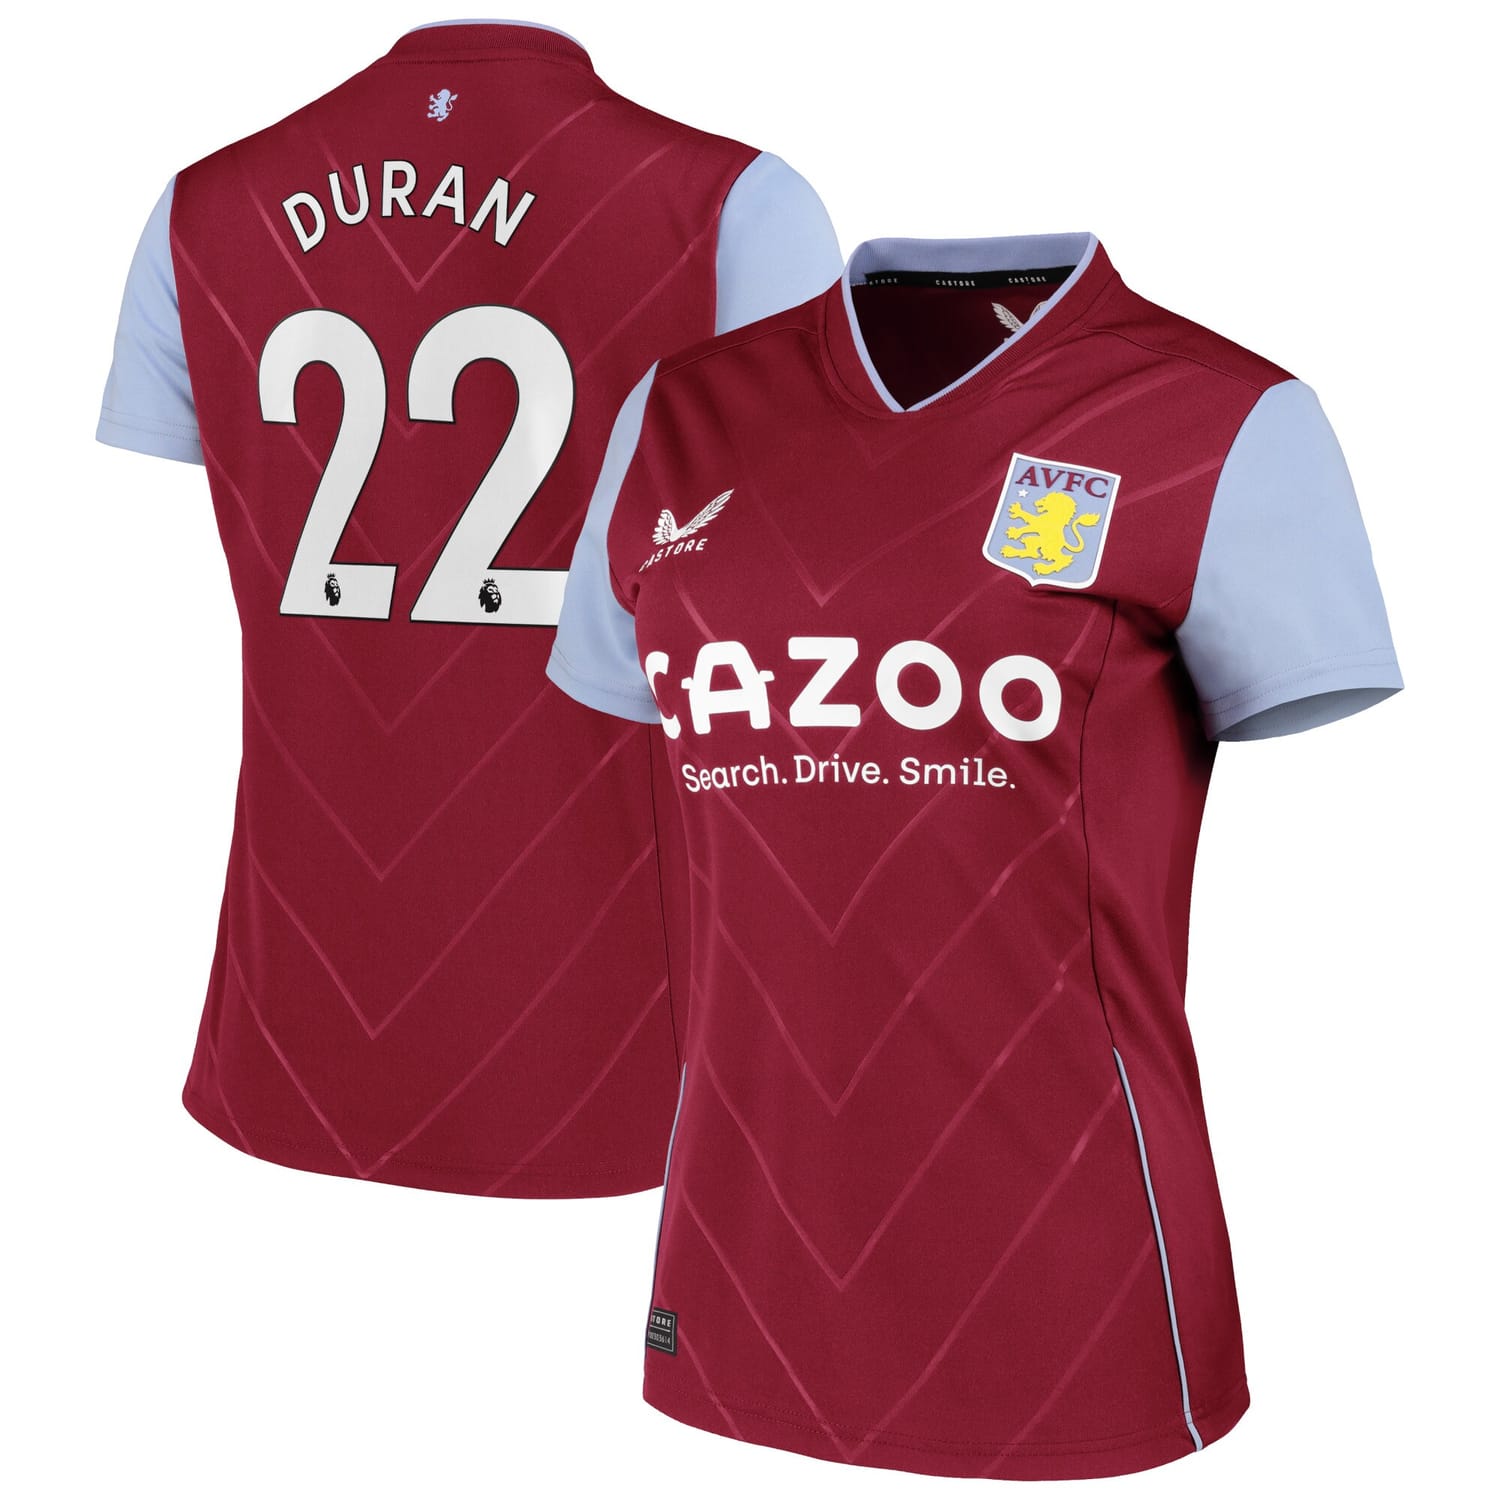 Premier League Aston Villa Home Jersey Shirt 2022-23 player Duran 22 printing for Women